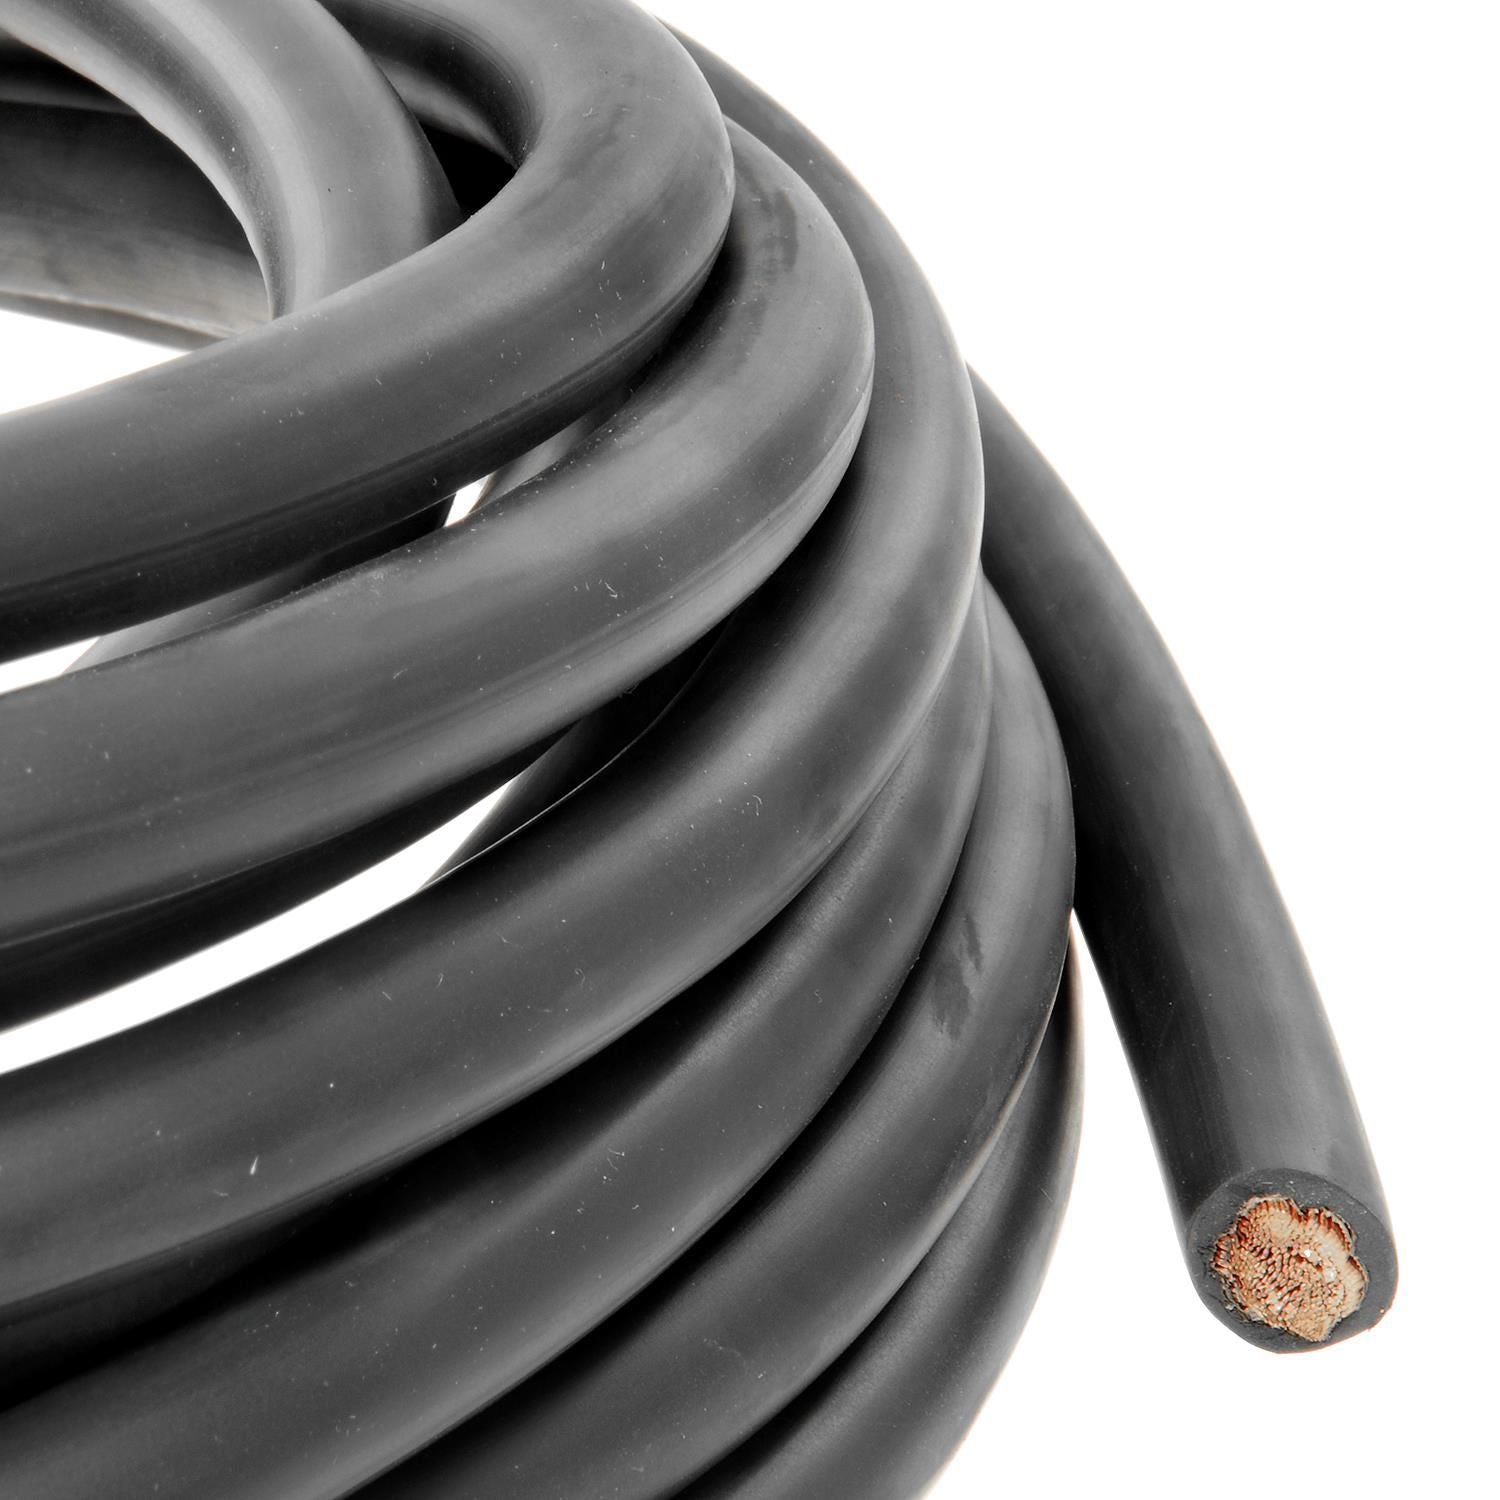 YSP CB5BK-50 Wells Bulk Cable (Black, 50', 2G)